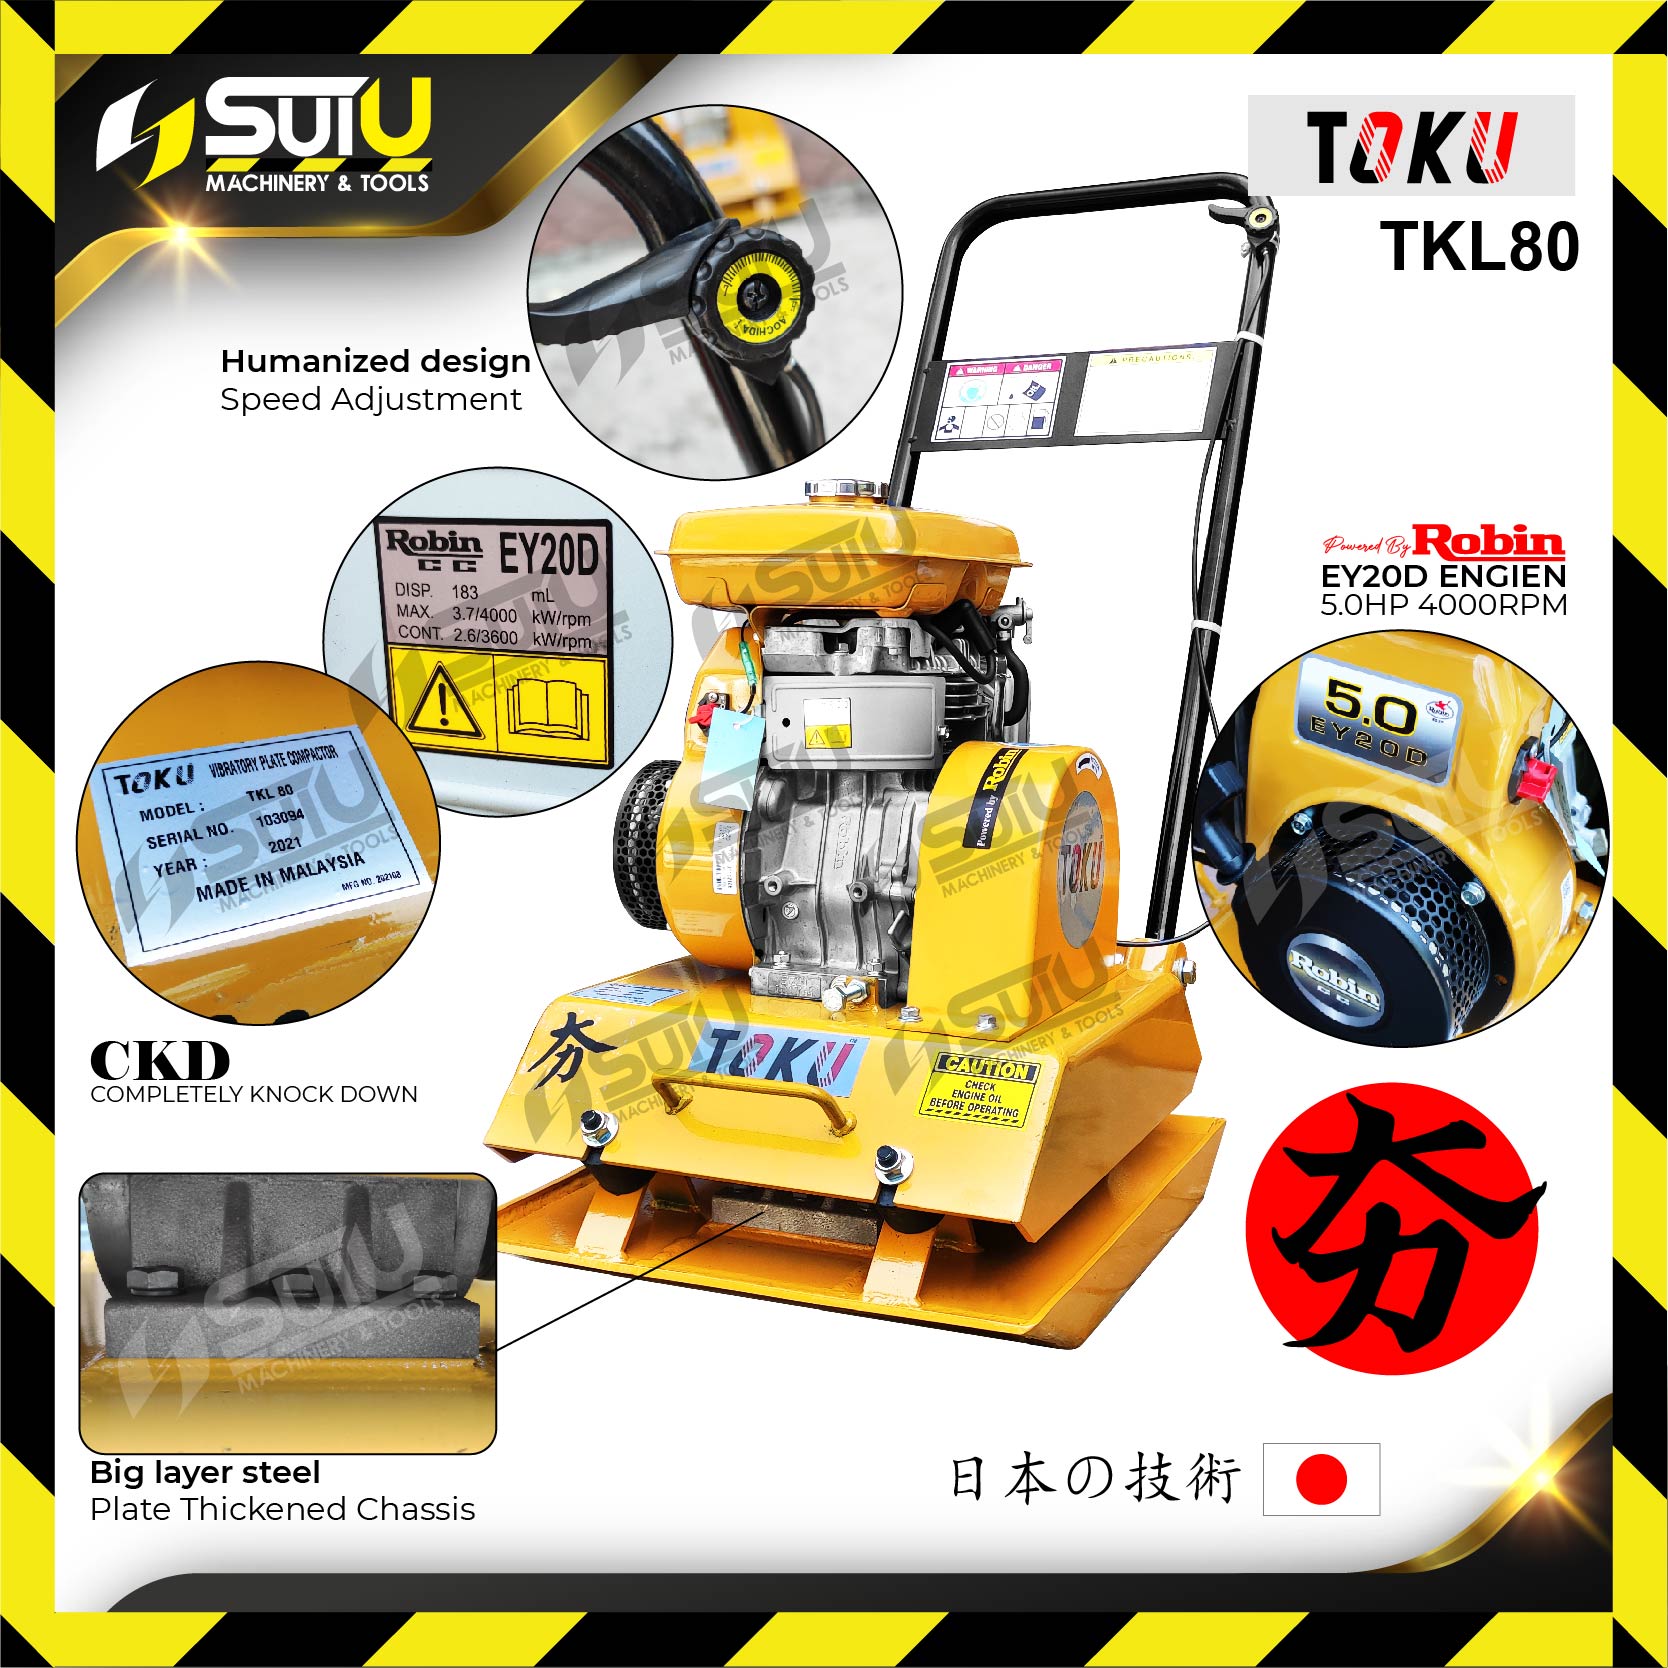 TOKU / HISAKI TKL-80 Vibrator Plate Compactor with Robin EY-20D Engine ...